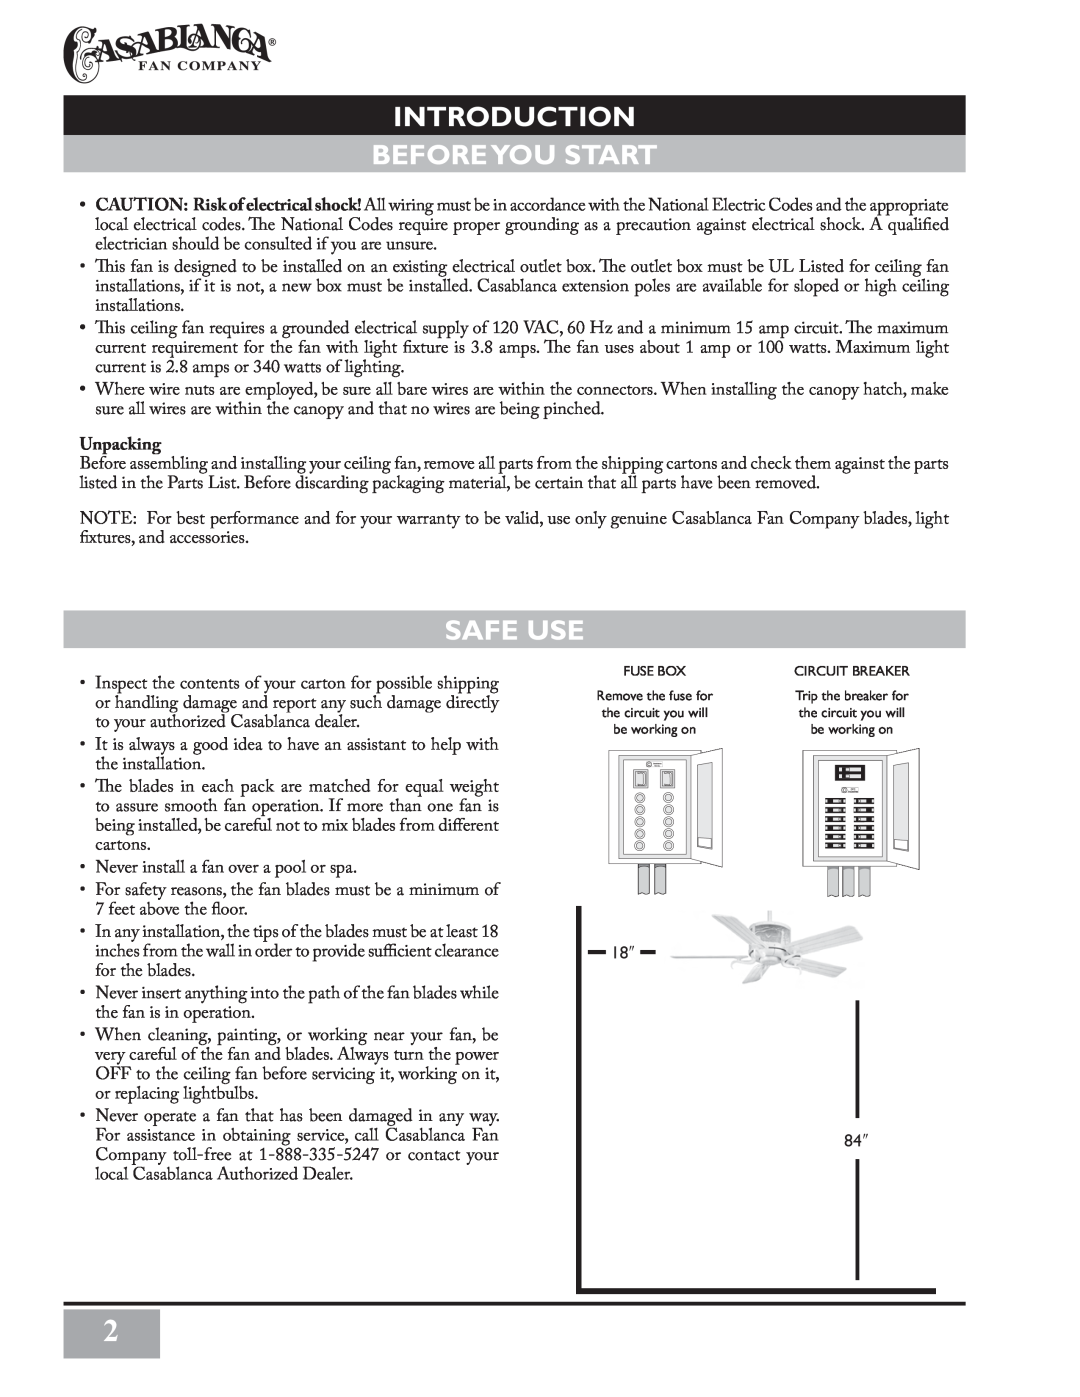 Casablanca Fan Company C3U72M owner manual Introduction Beforeyou Start, Safe Use, Unpacking 